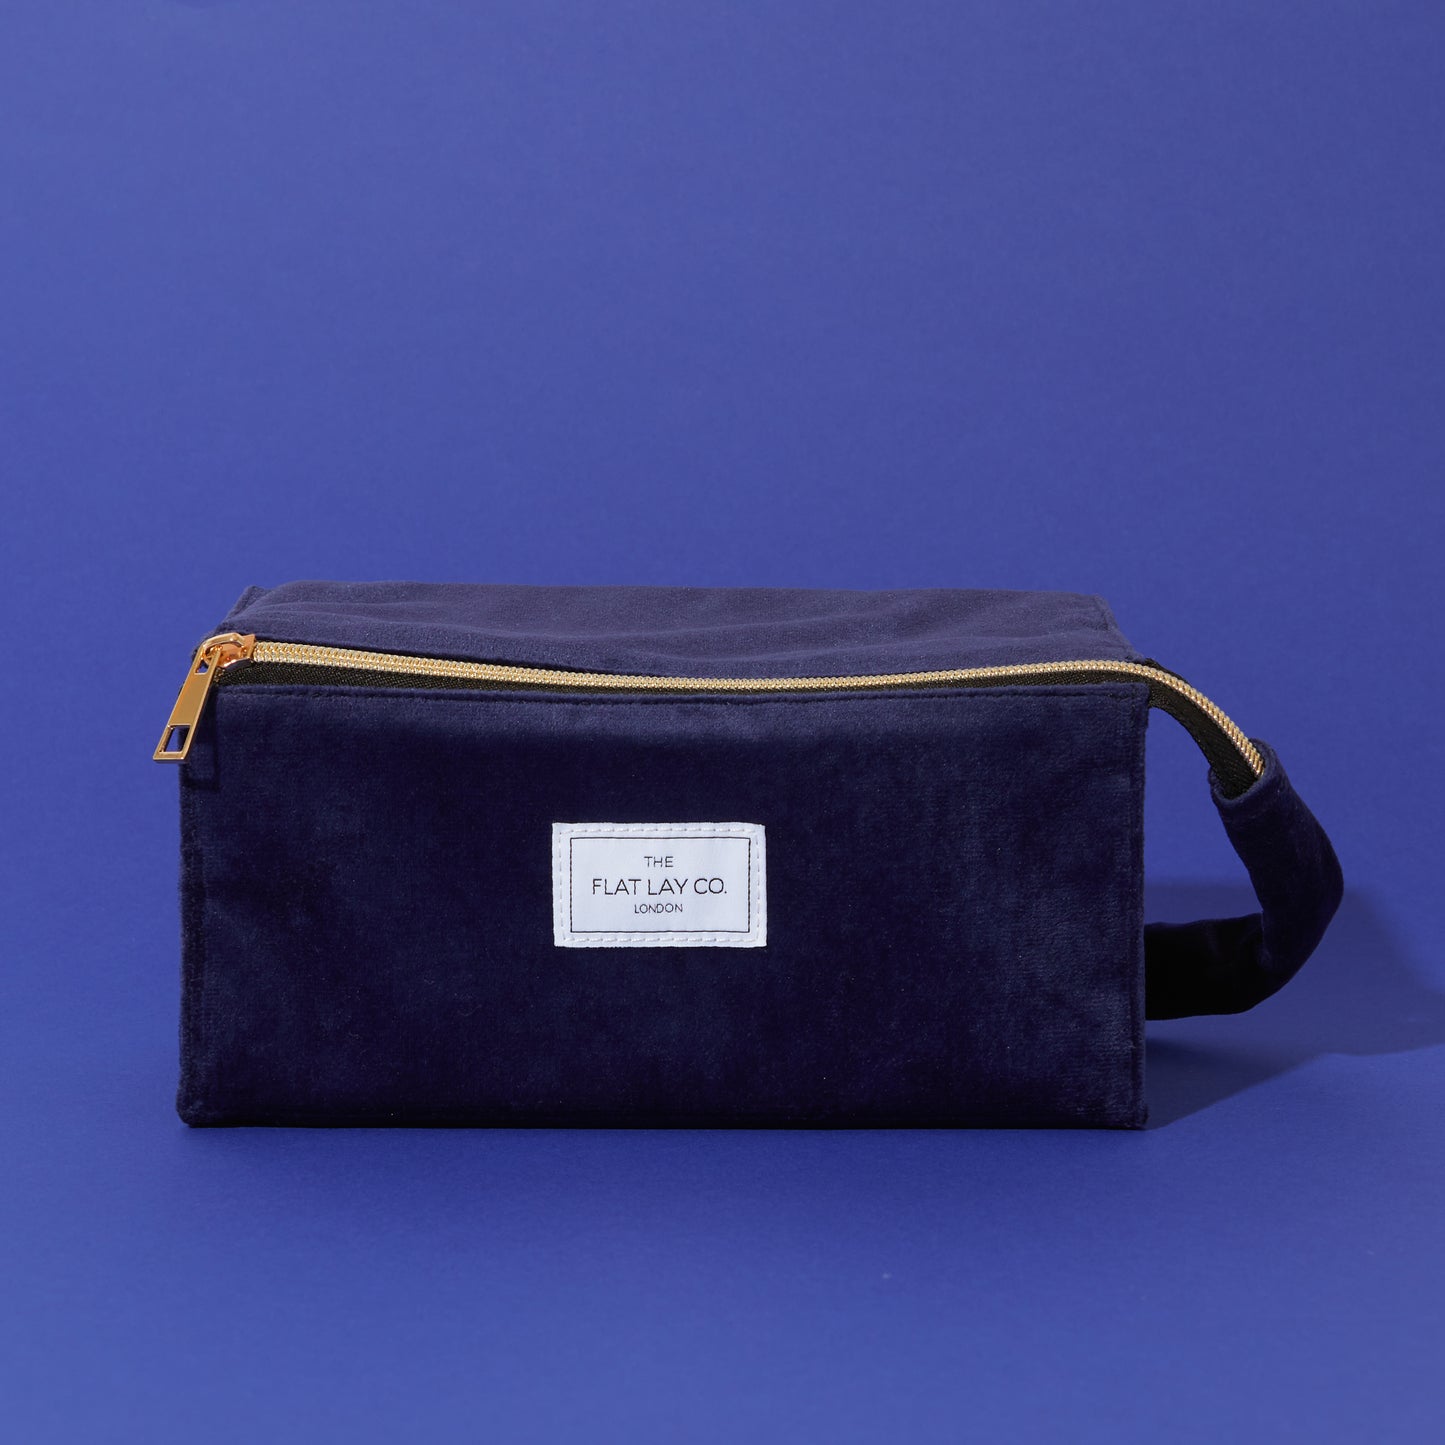 Blue Velvet Open Flat Makeup Box Bag and Tray